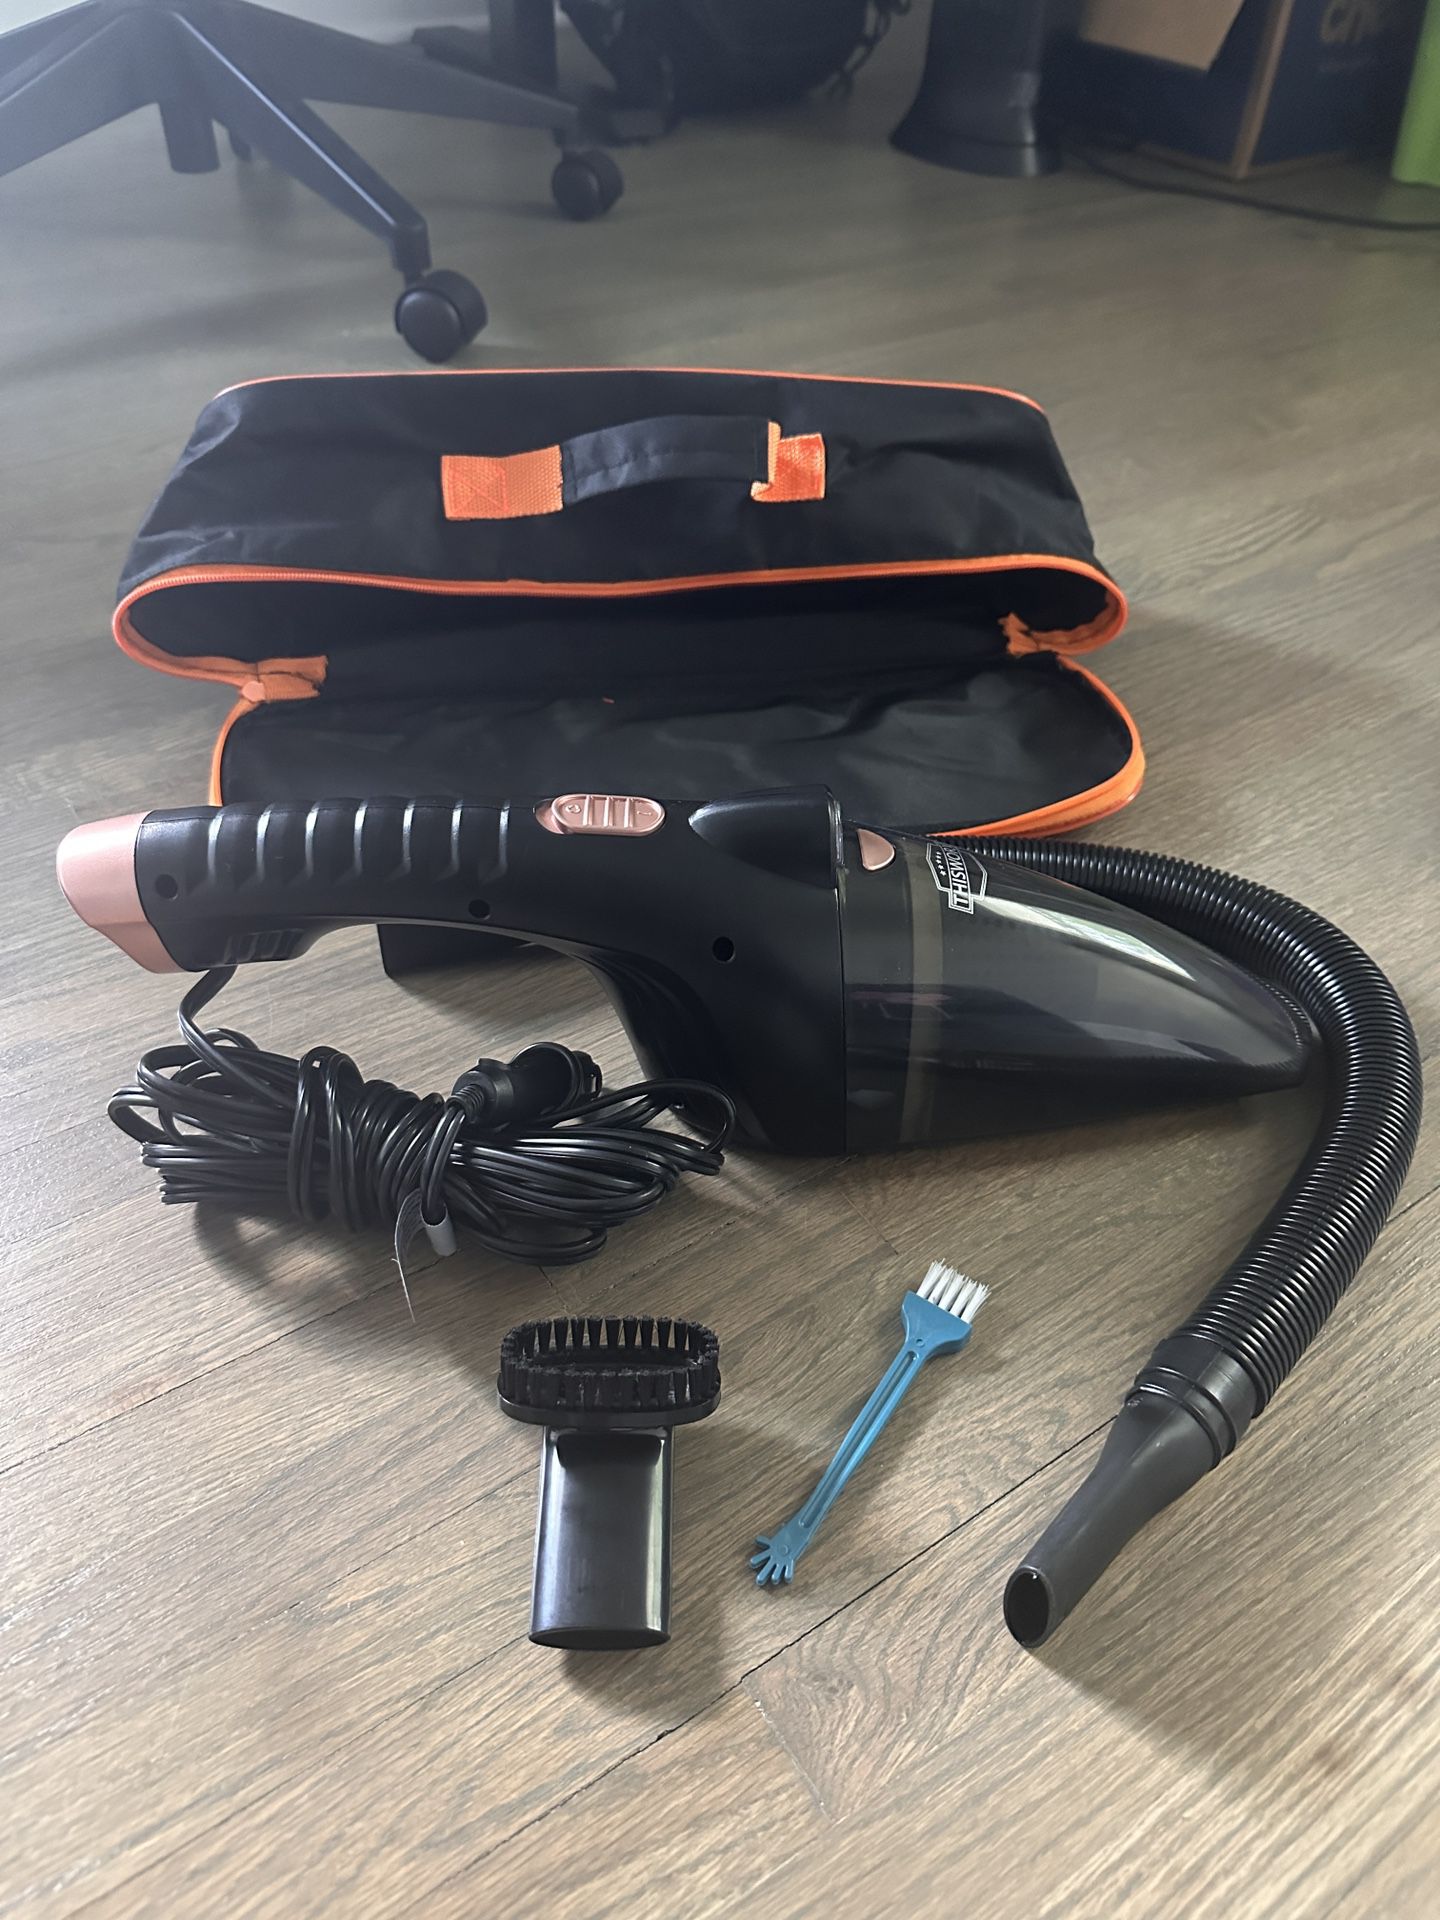 ThisWorx Portable Handheld Car Vacuum Cleaner